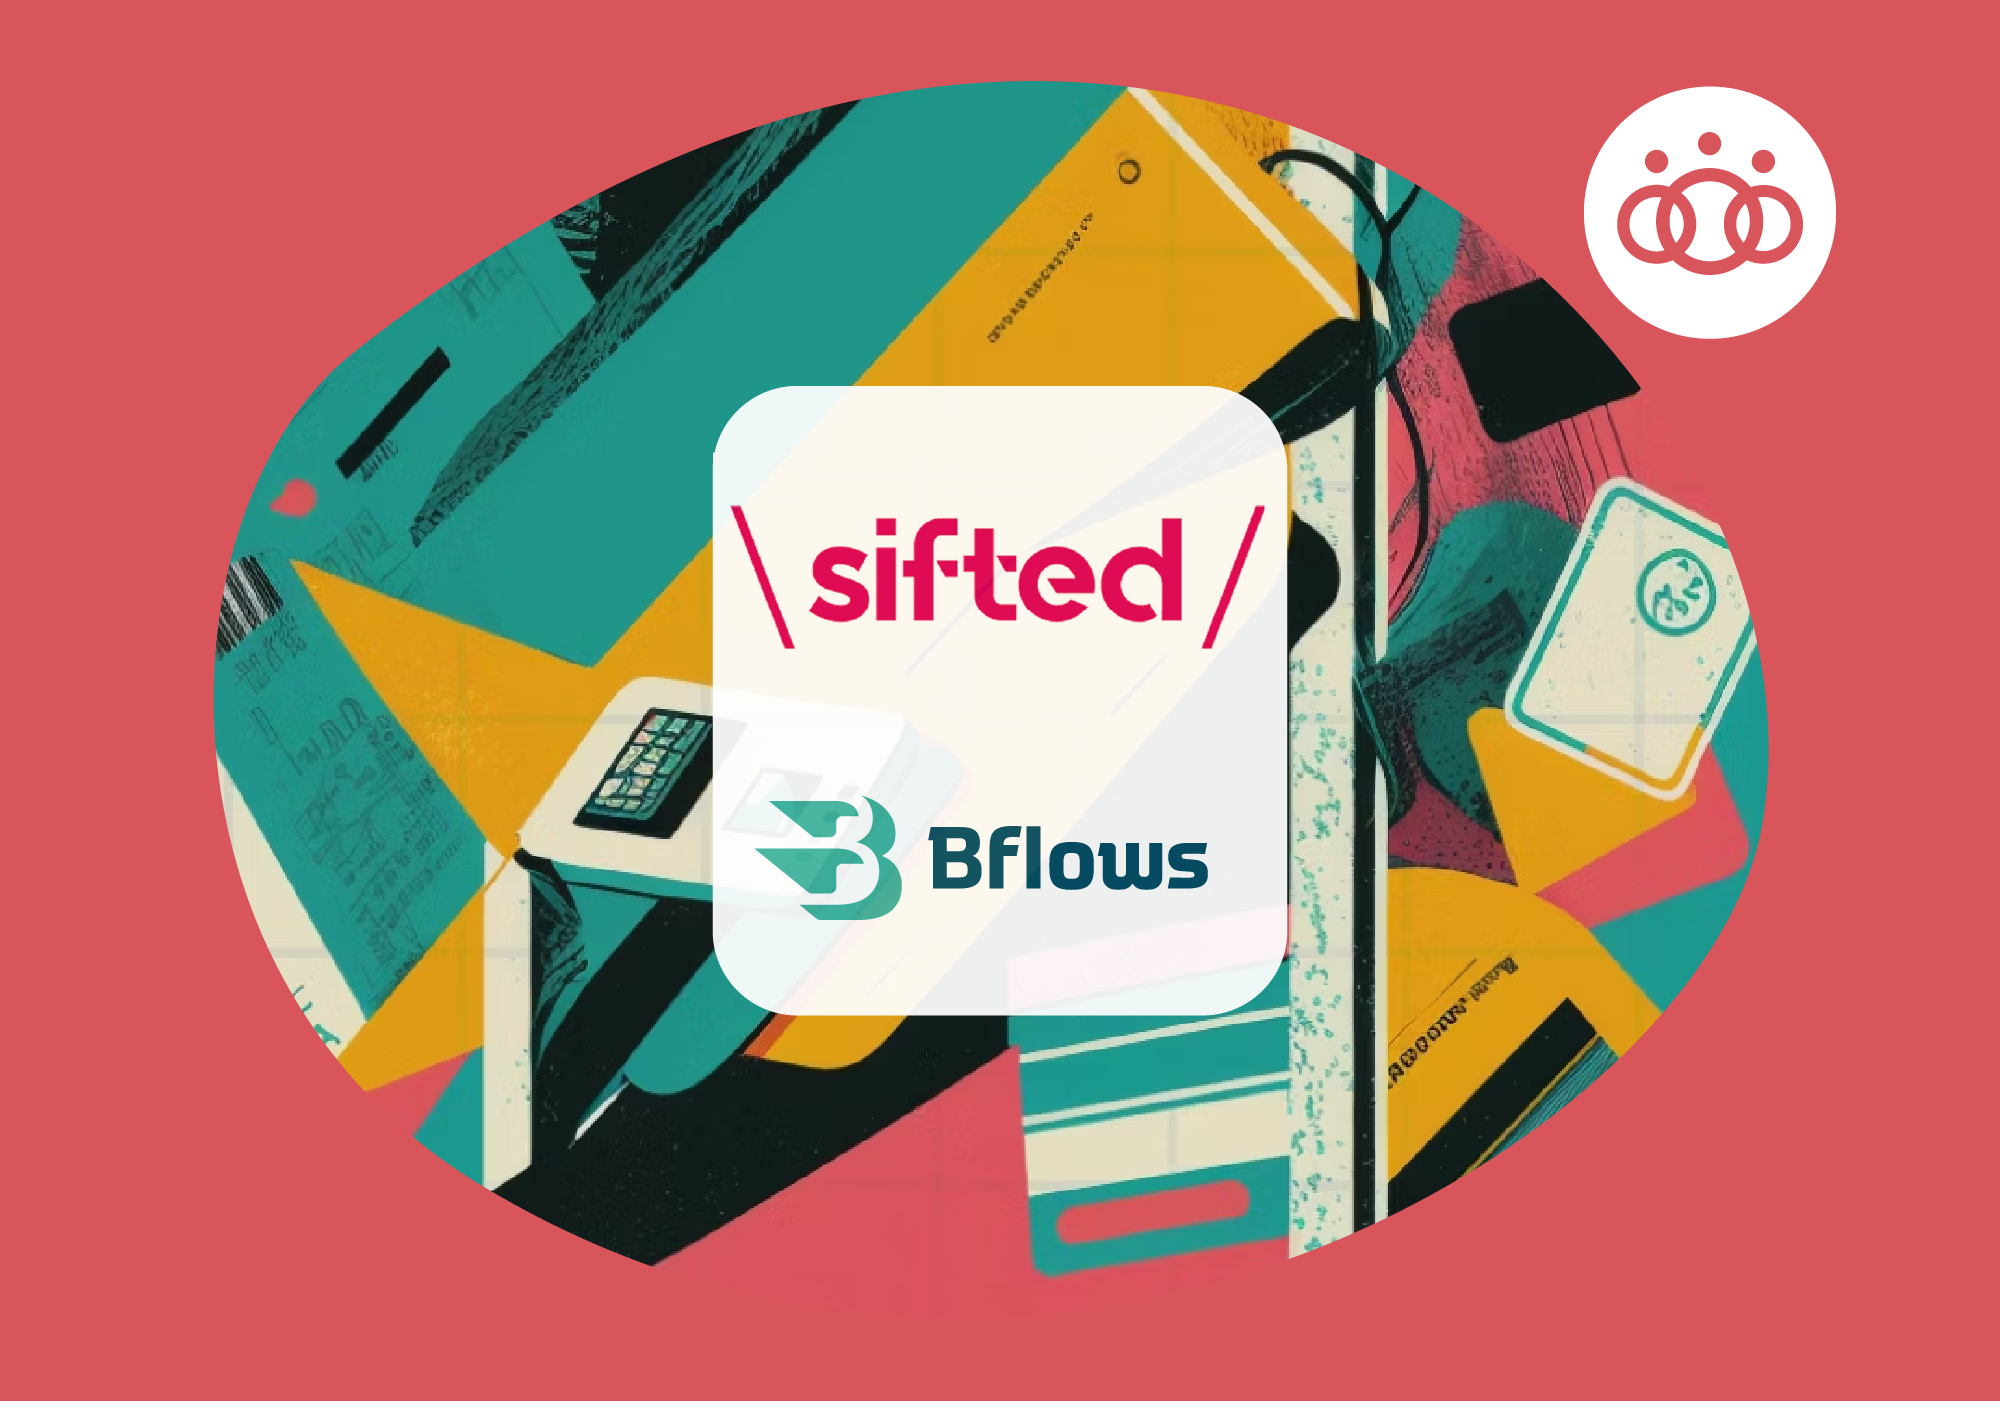 Bflows tra le startup “payments” più promettenti d’Europa secondo Sifted e il Financial Times 